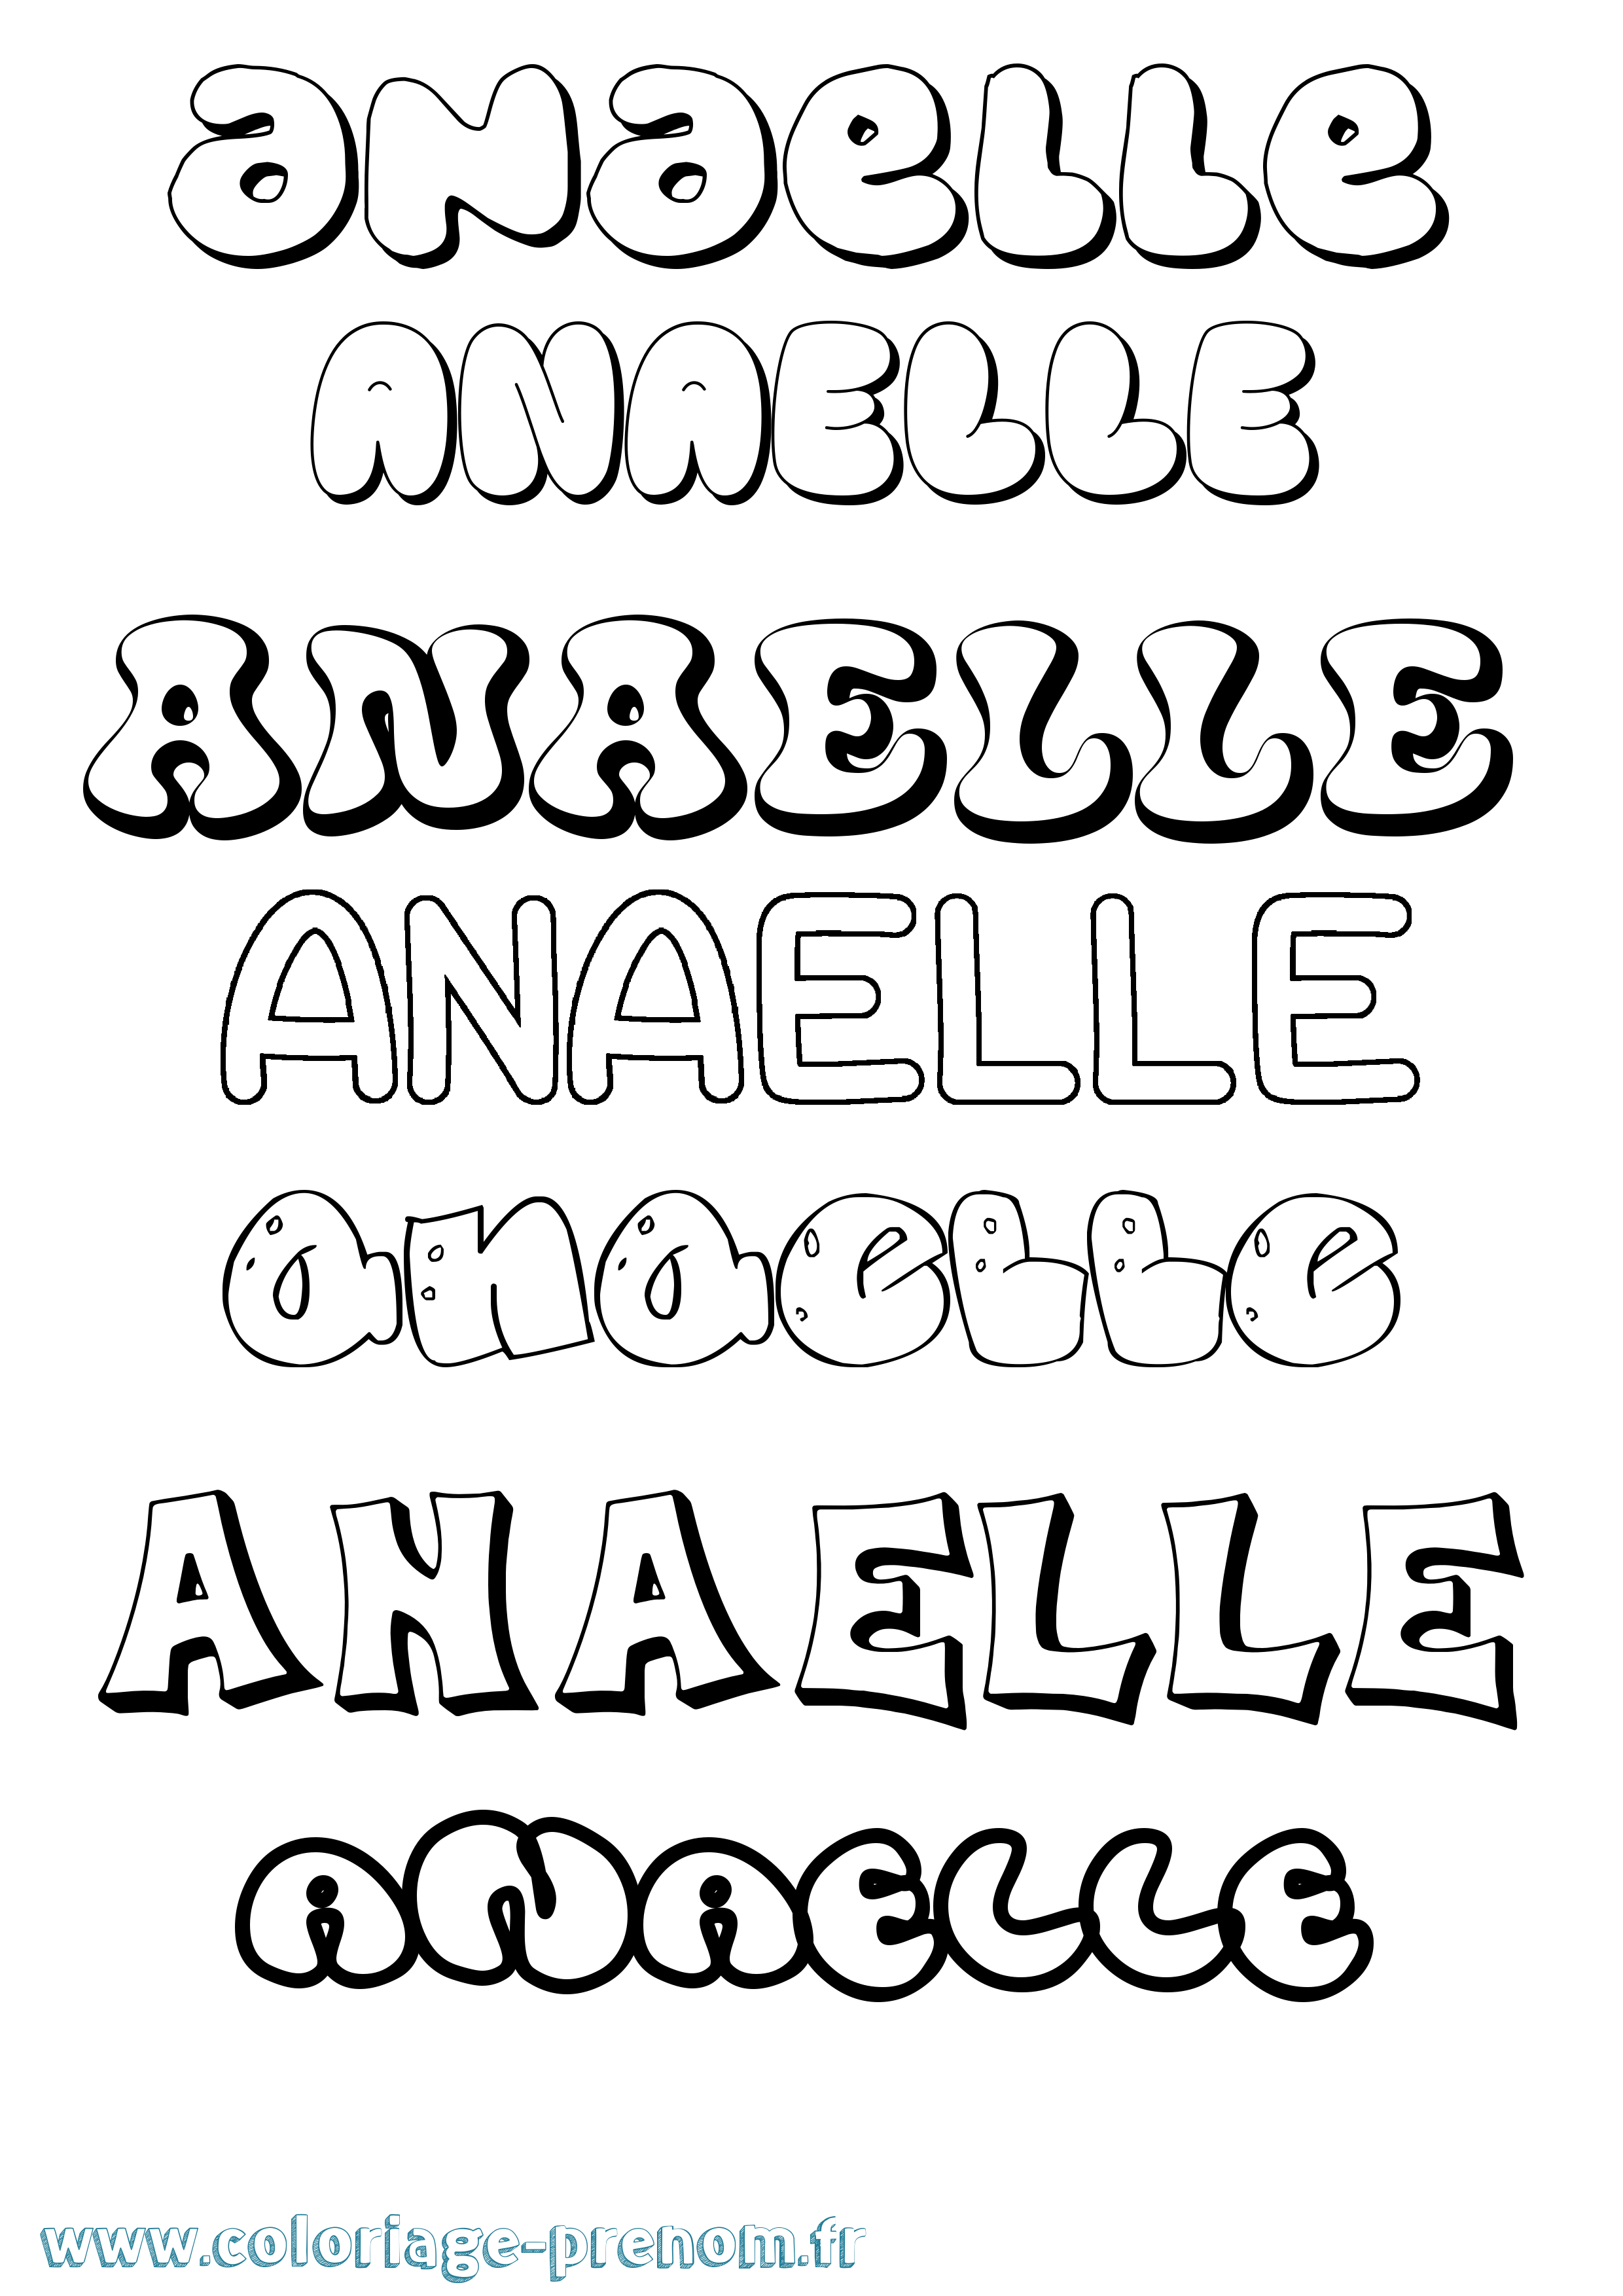 Coloriage prénom Anaelle